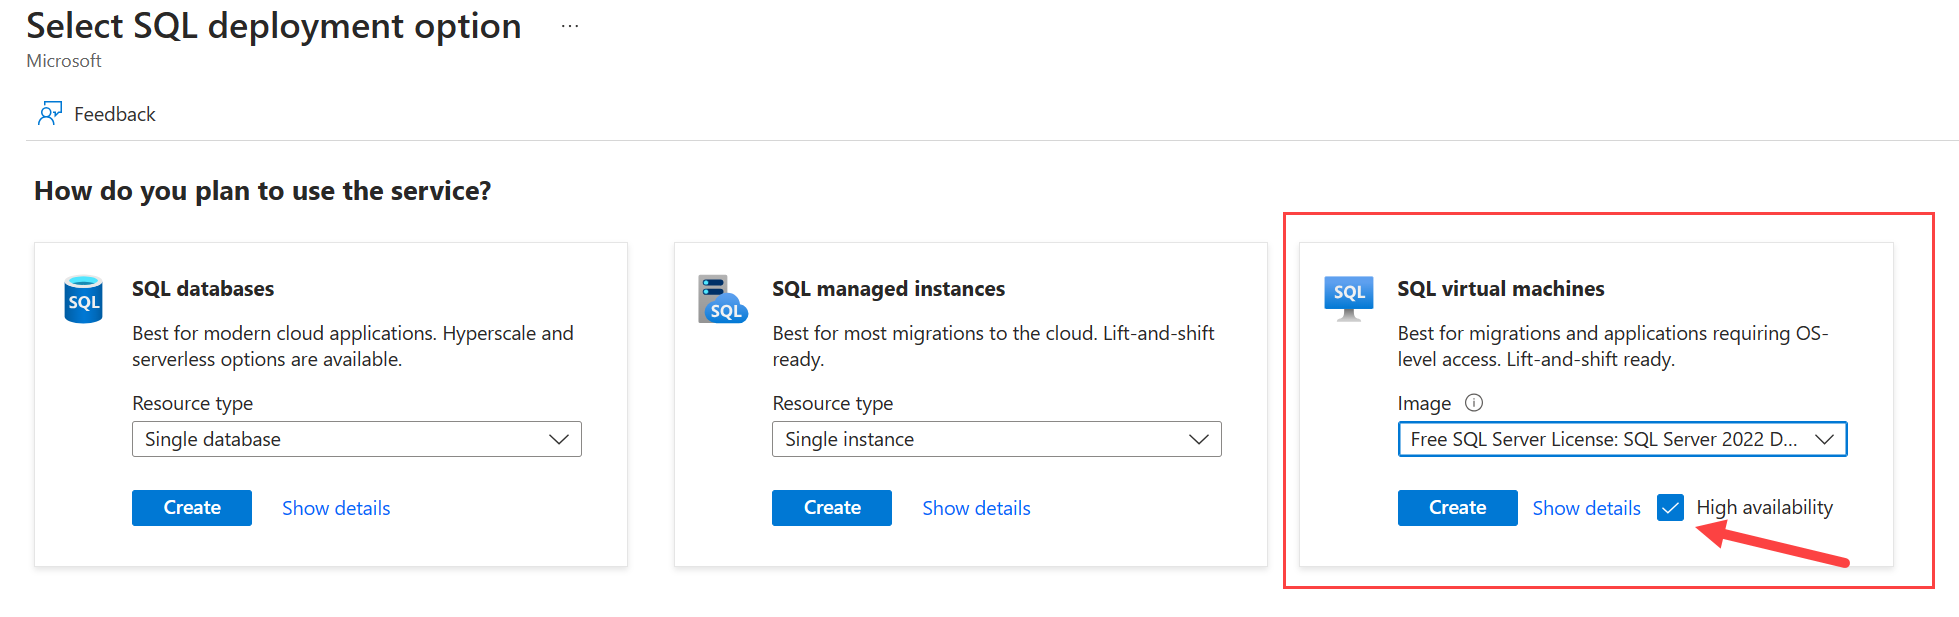 Azure 门户的屏幕截图，其中显示了用于选择 SQL Server 部署选项的页面，并且已选中“高可用性”。